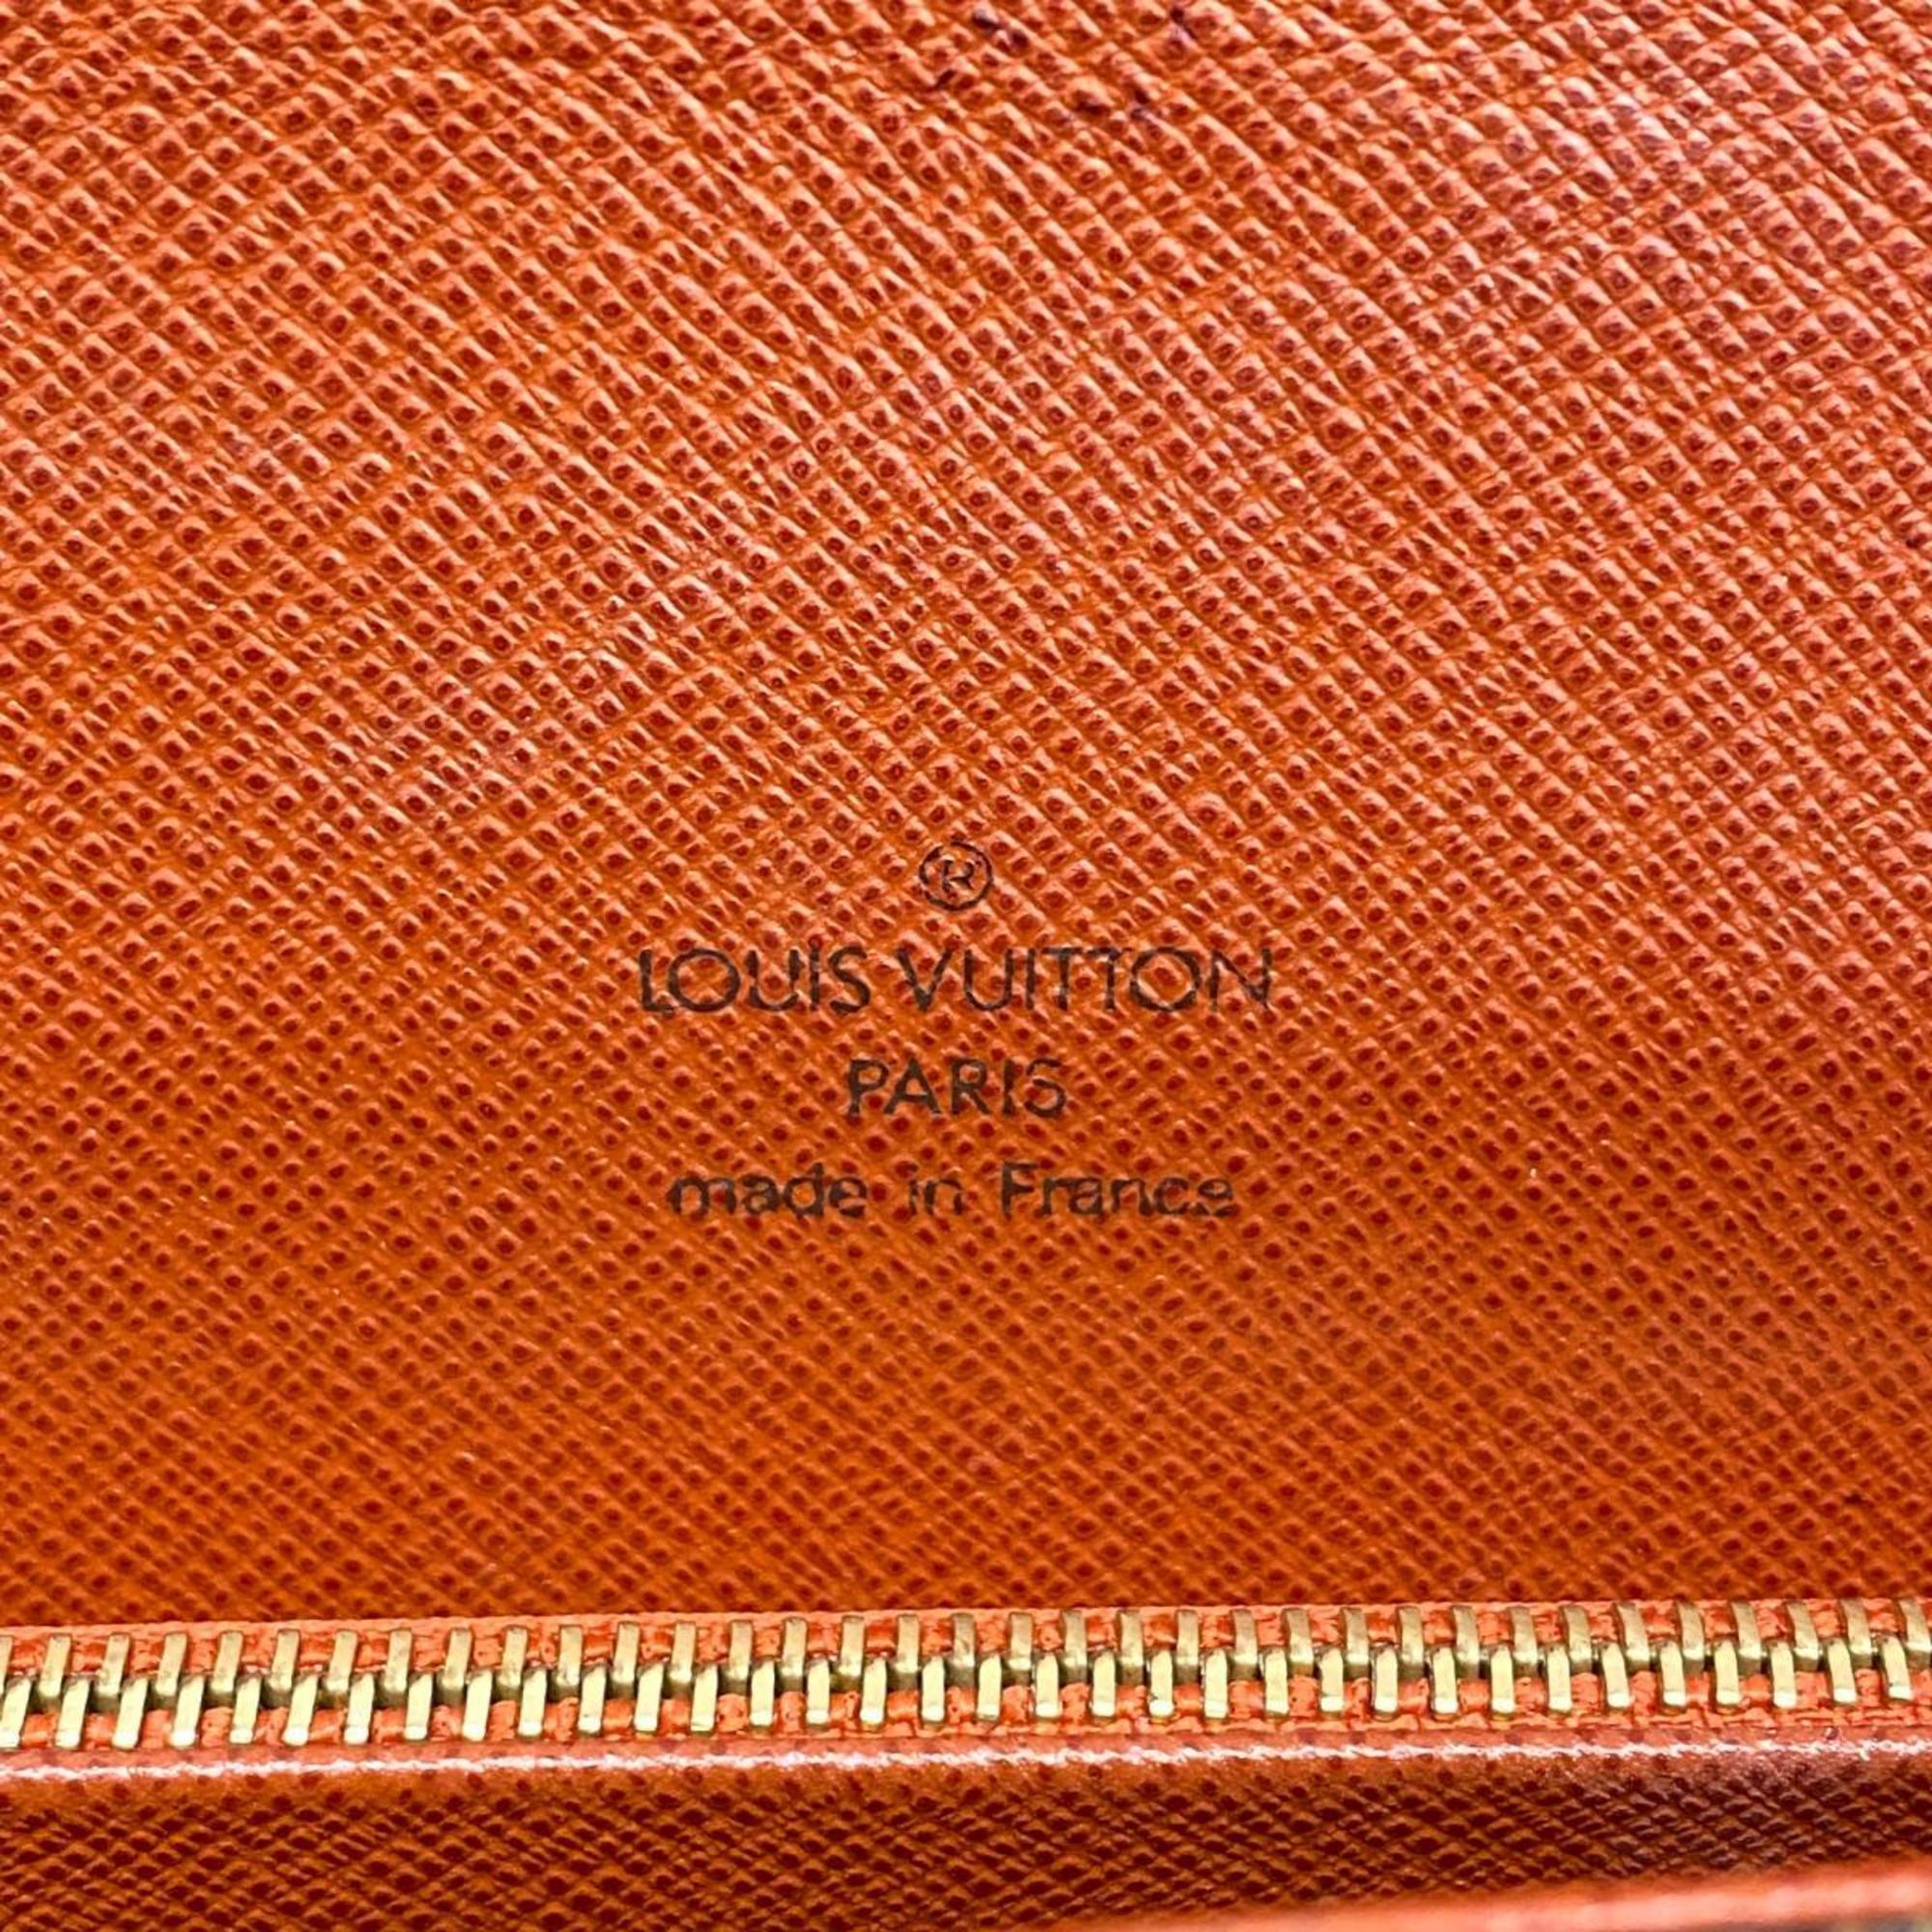 Louis Vuitton Shoulder Bag Damier Tribecalon N51160 Ebene Women's